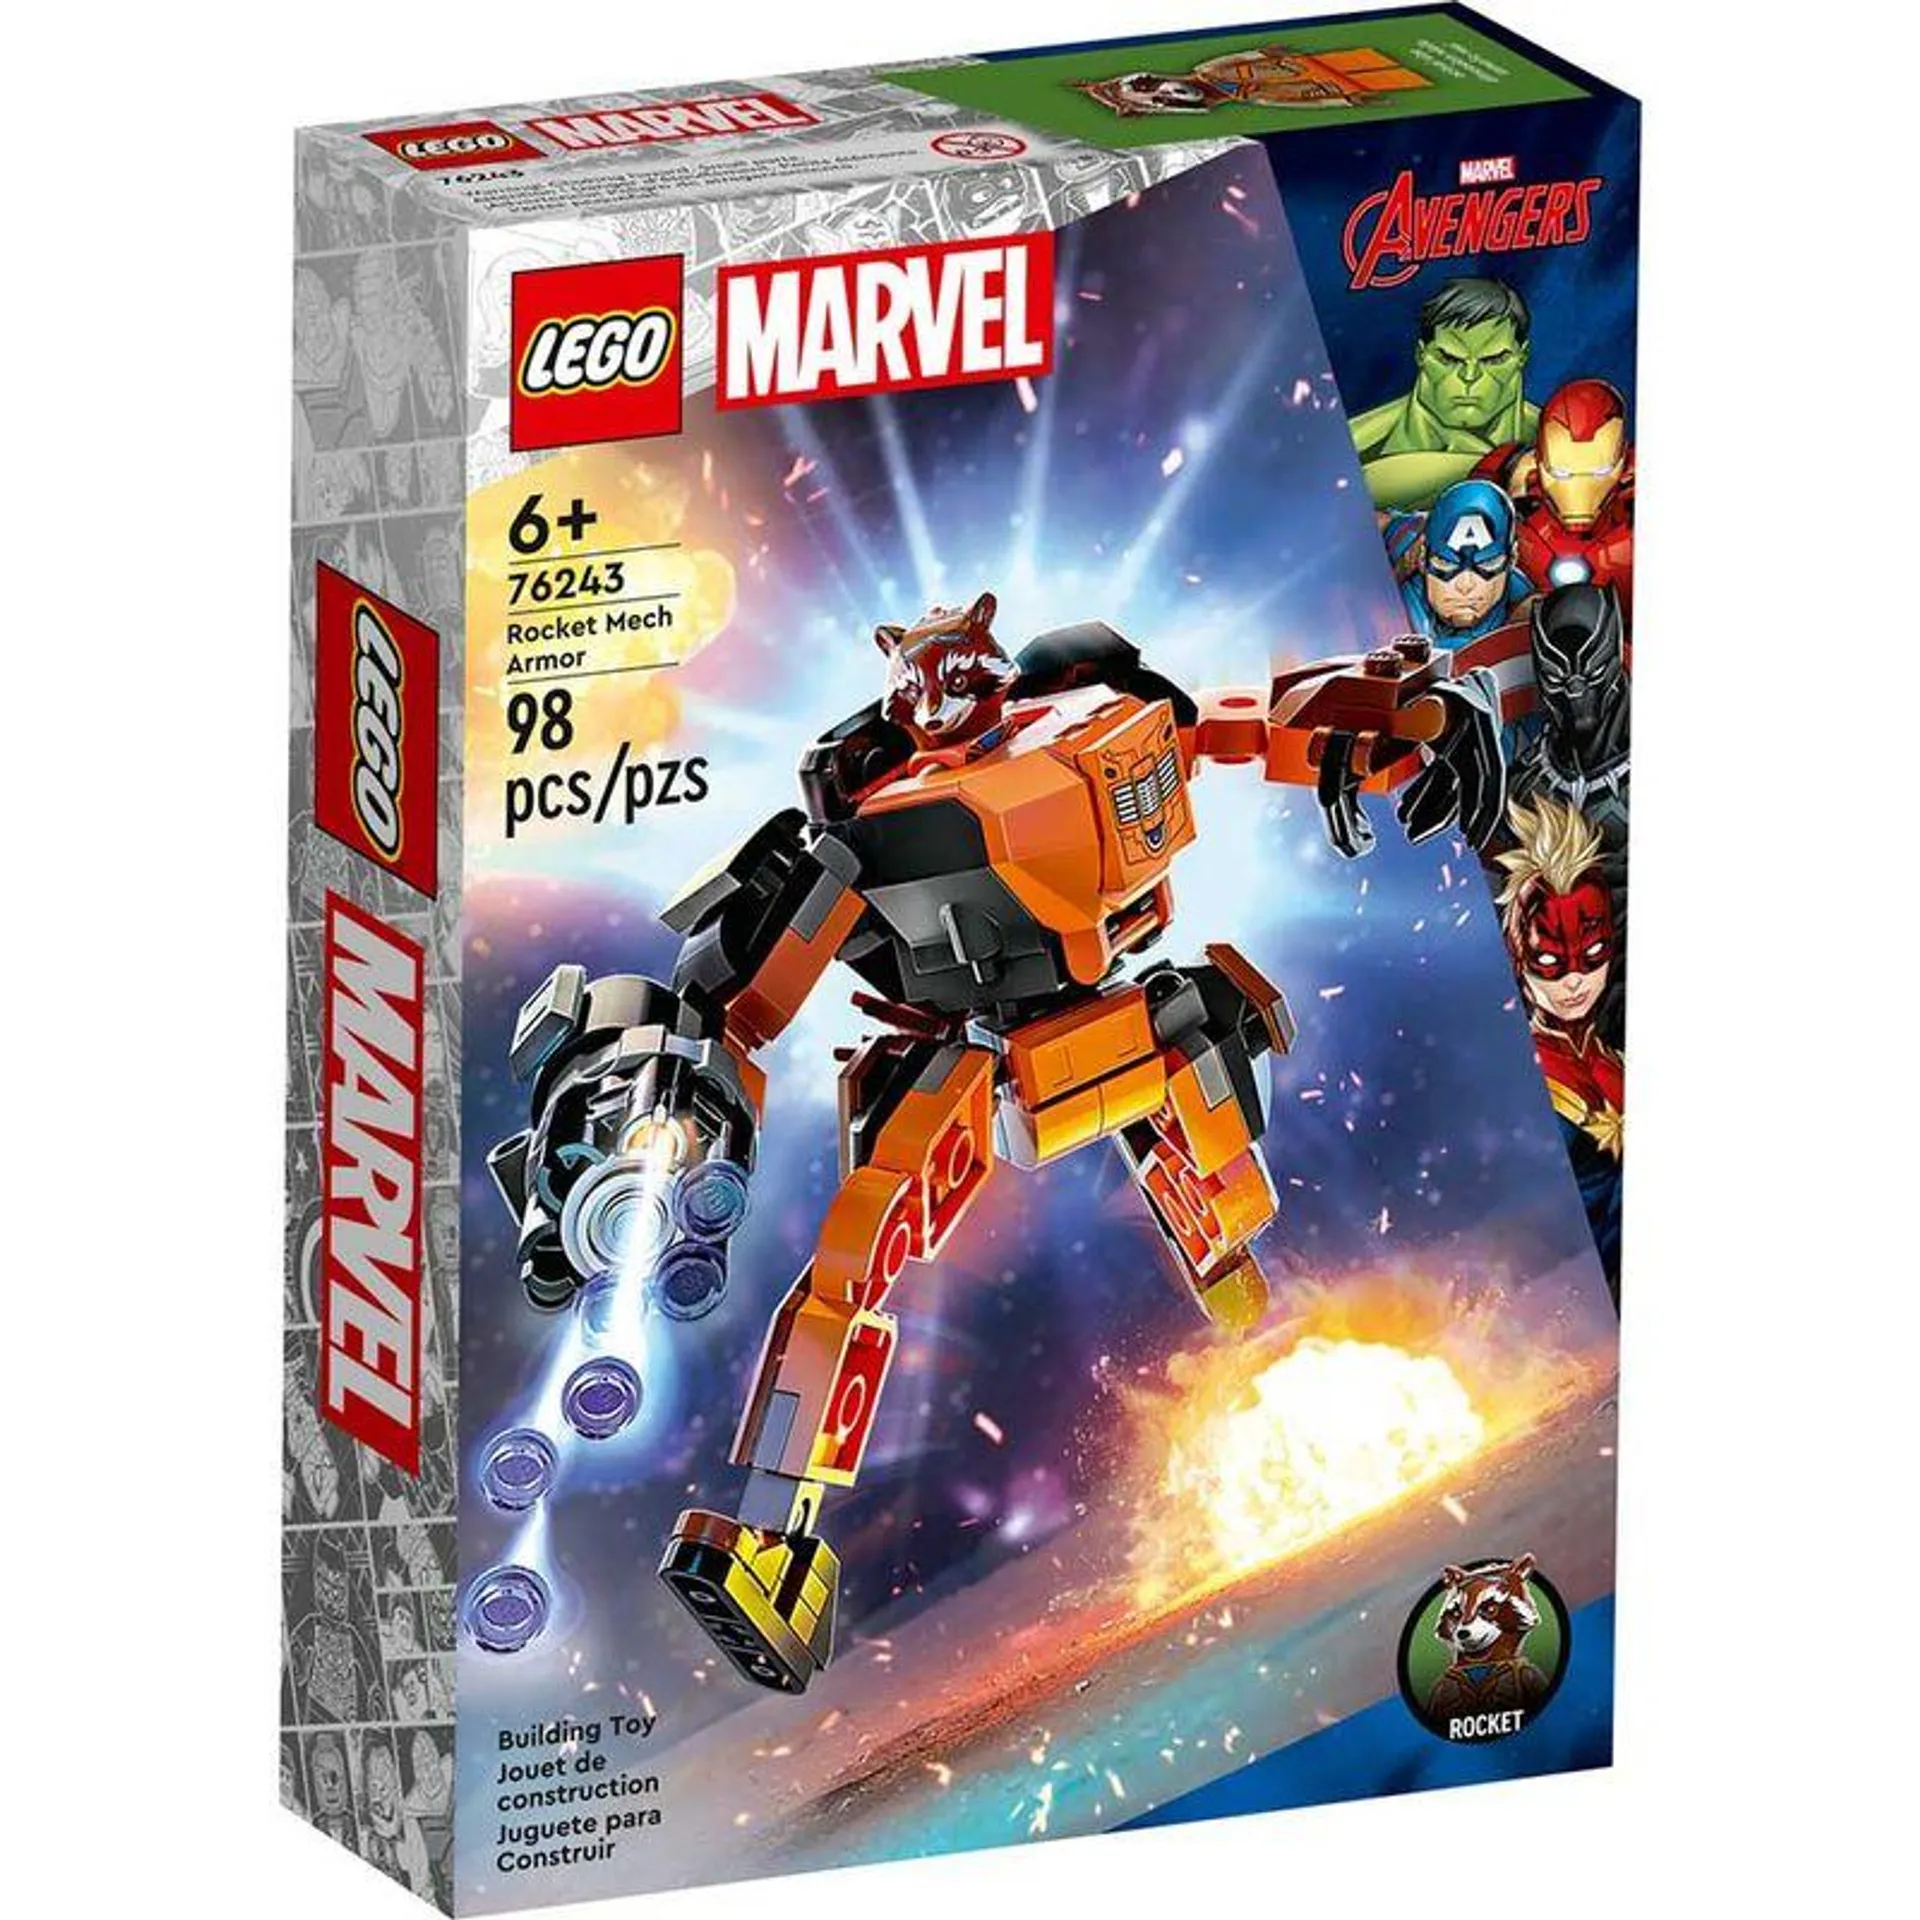 Lego Marvel Rocket Mech Armor Lego LE76243